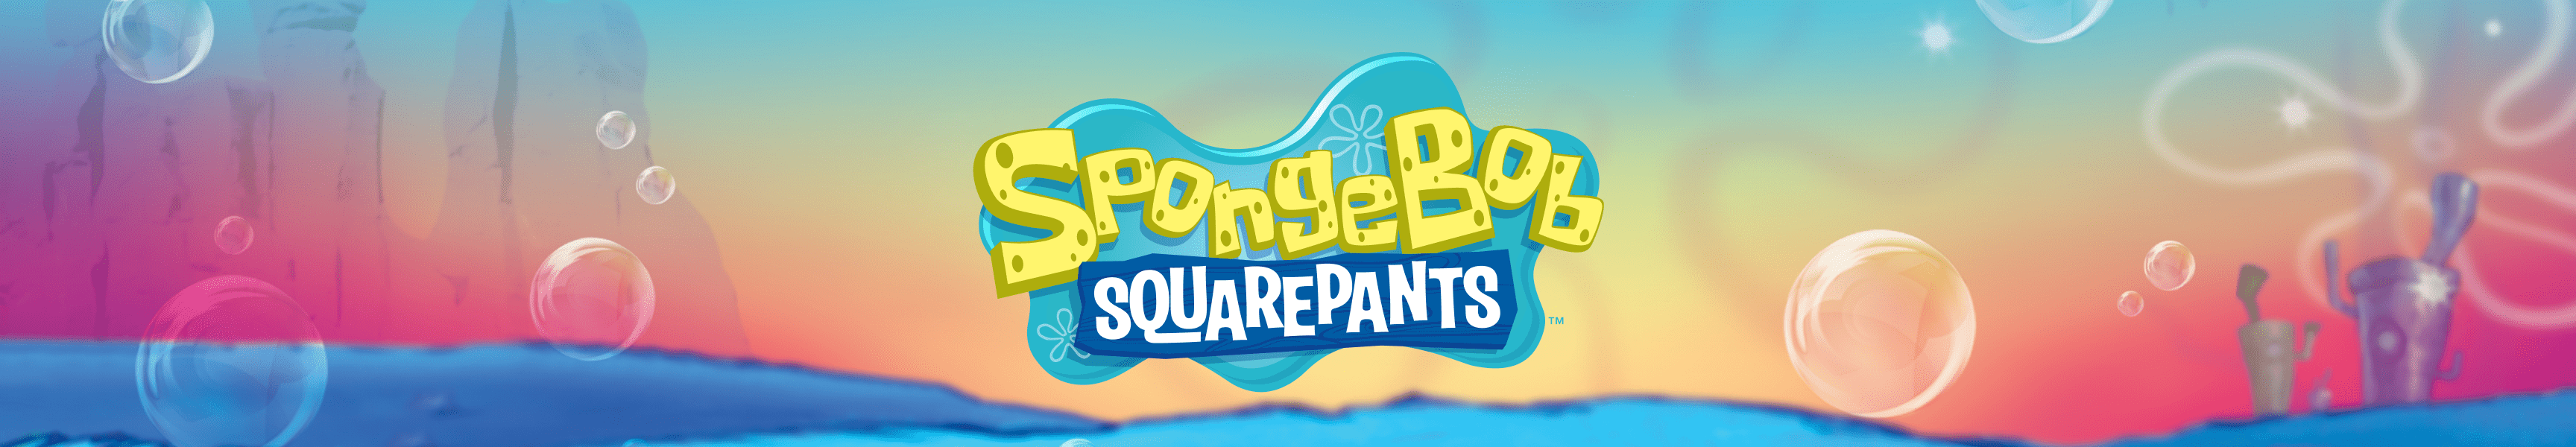 SpongeBob SquarePants Workout